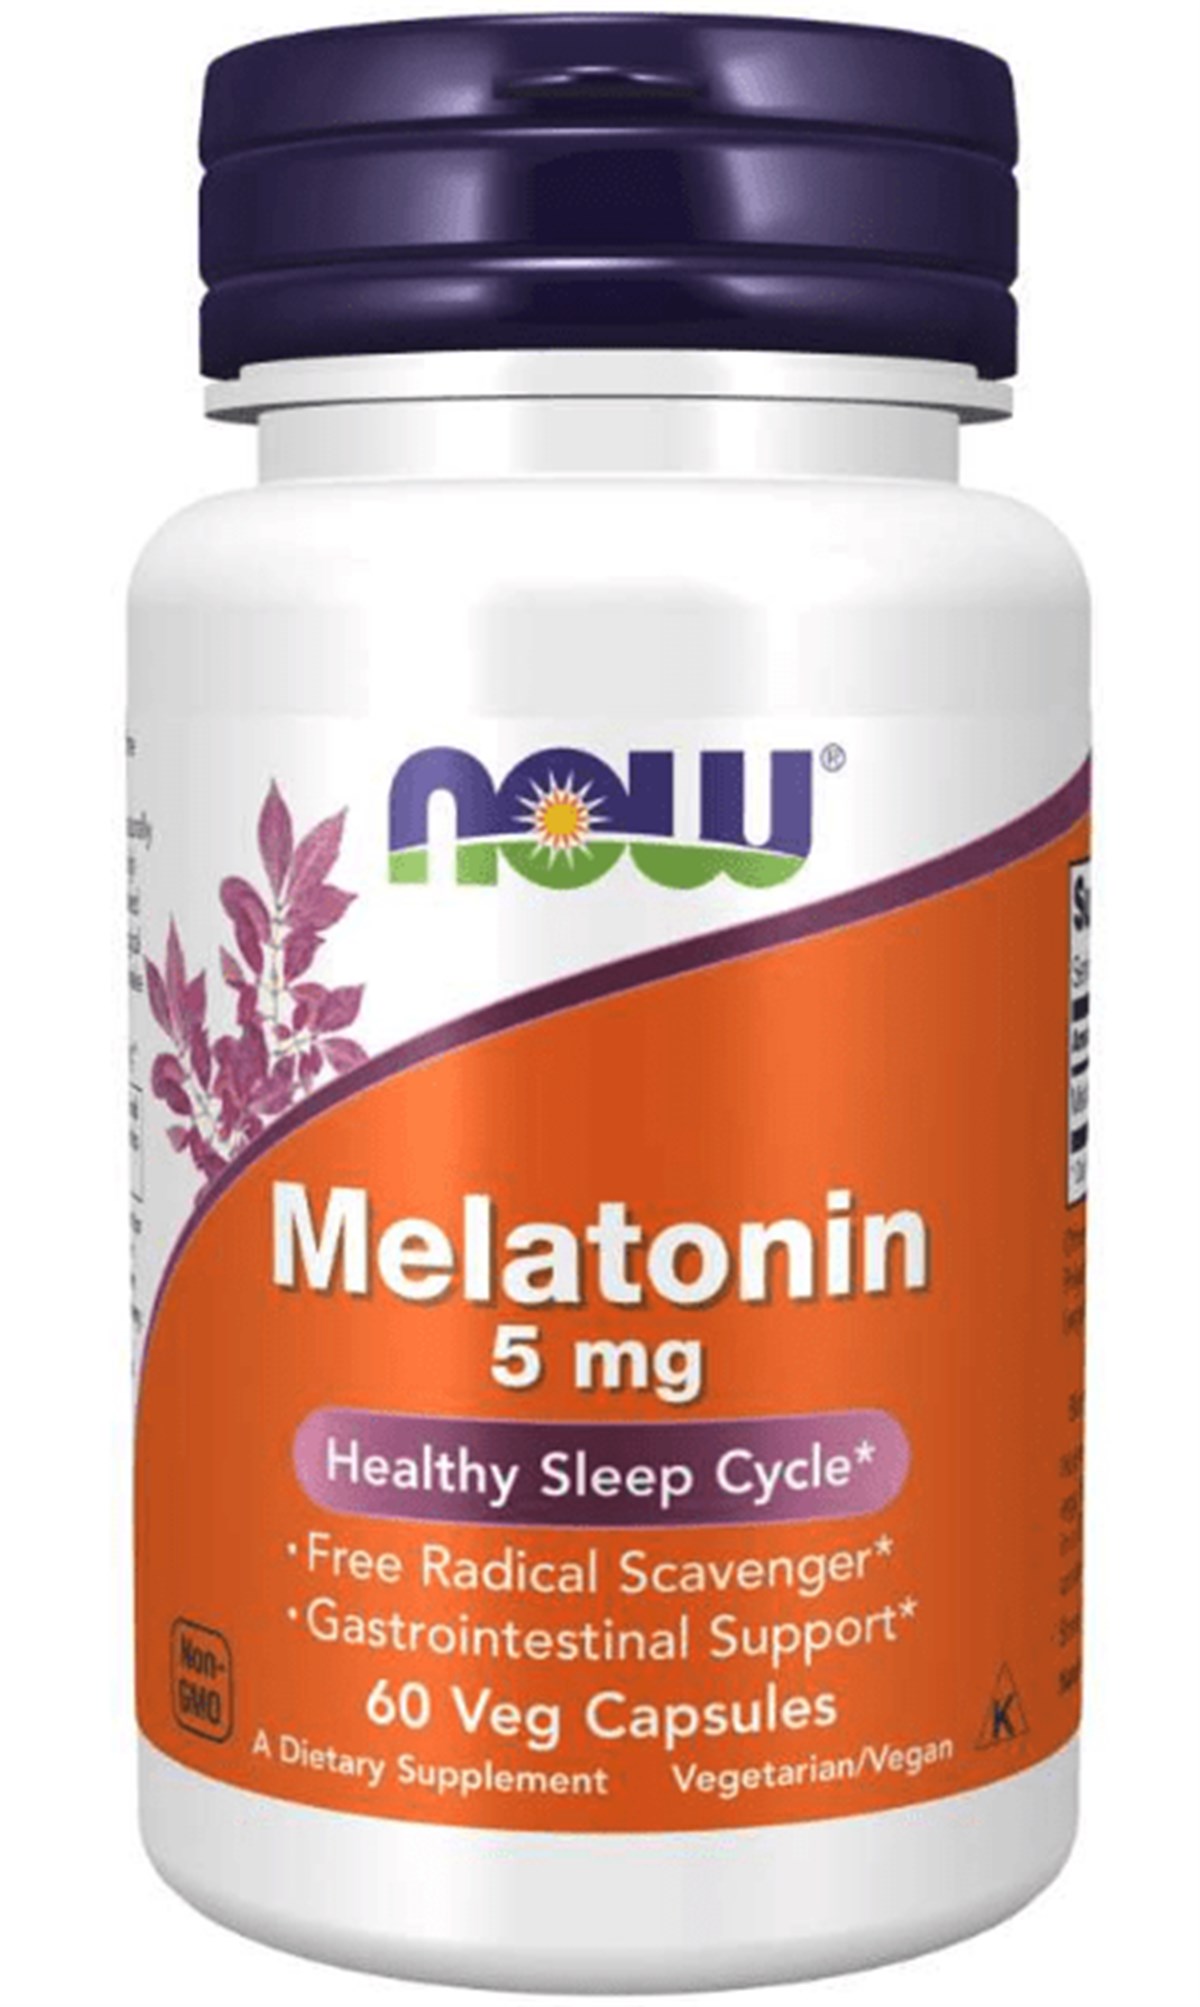 NOW MELATONİN 5 mg 60 CAPS.